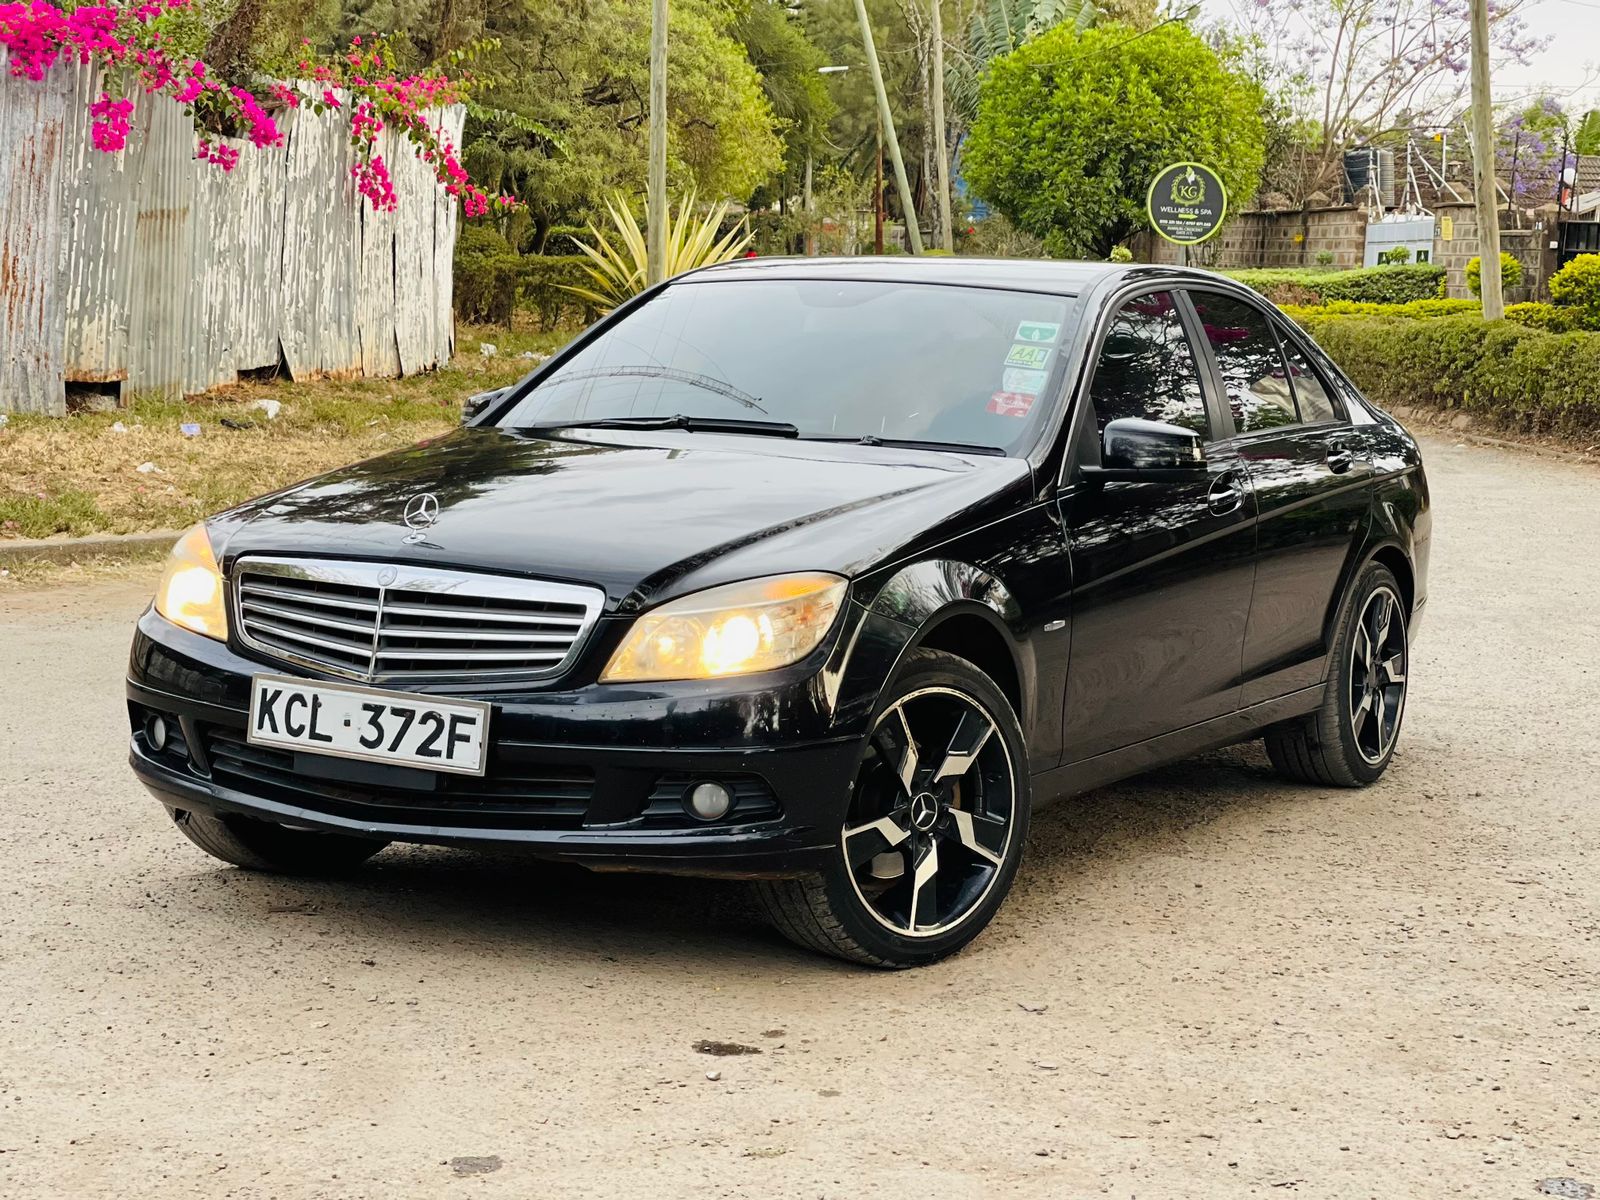 Mercedes Benz C200 black 2010 You Pay 30% DEPOSIT Trade in OK